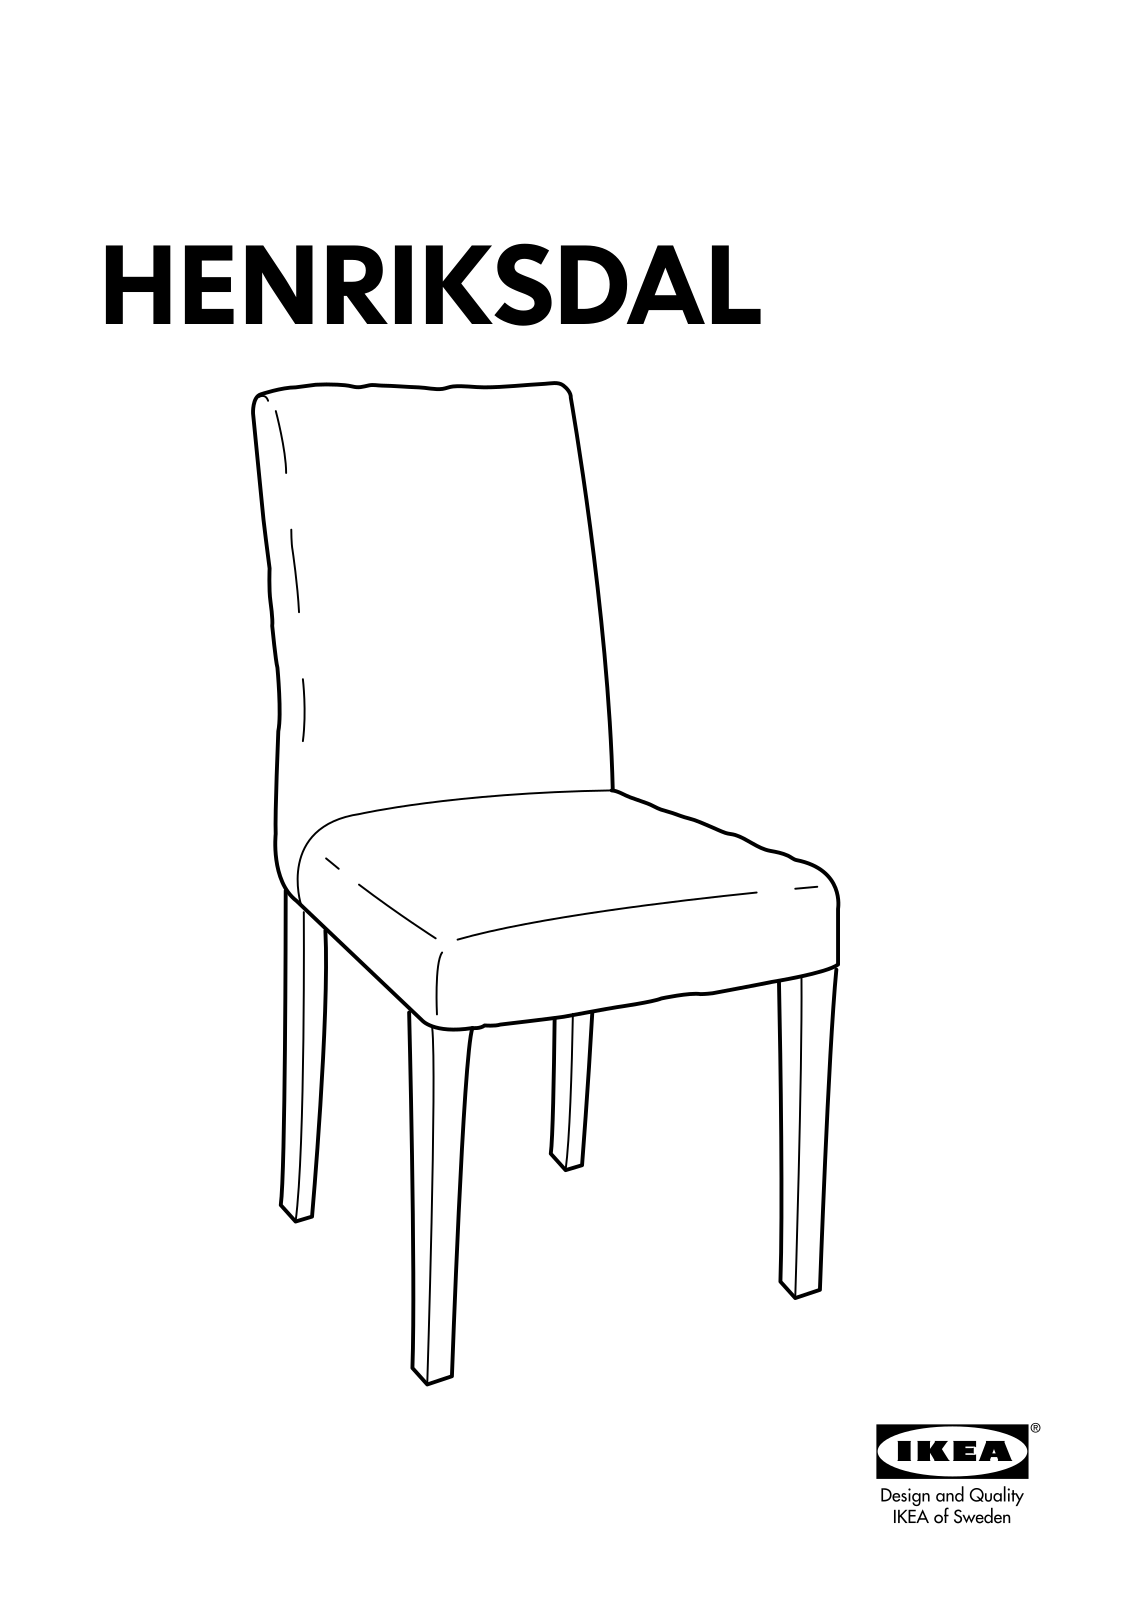 IKEA HENRIKSDAL User Manual